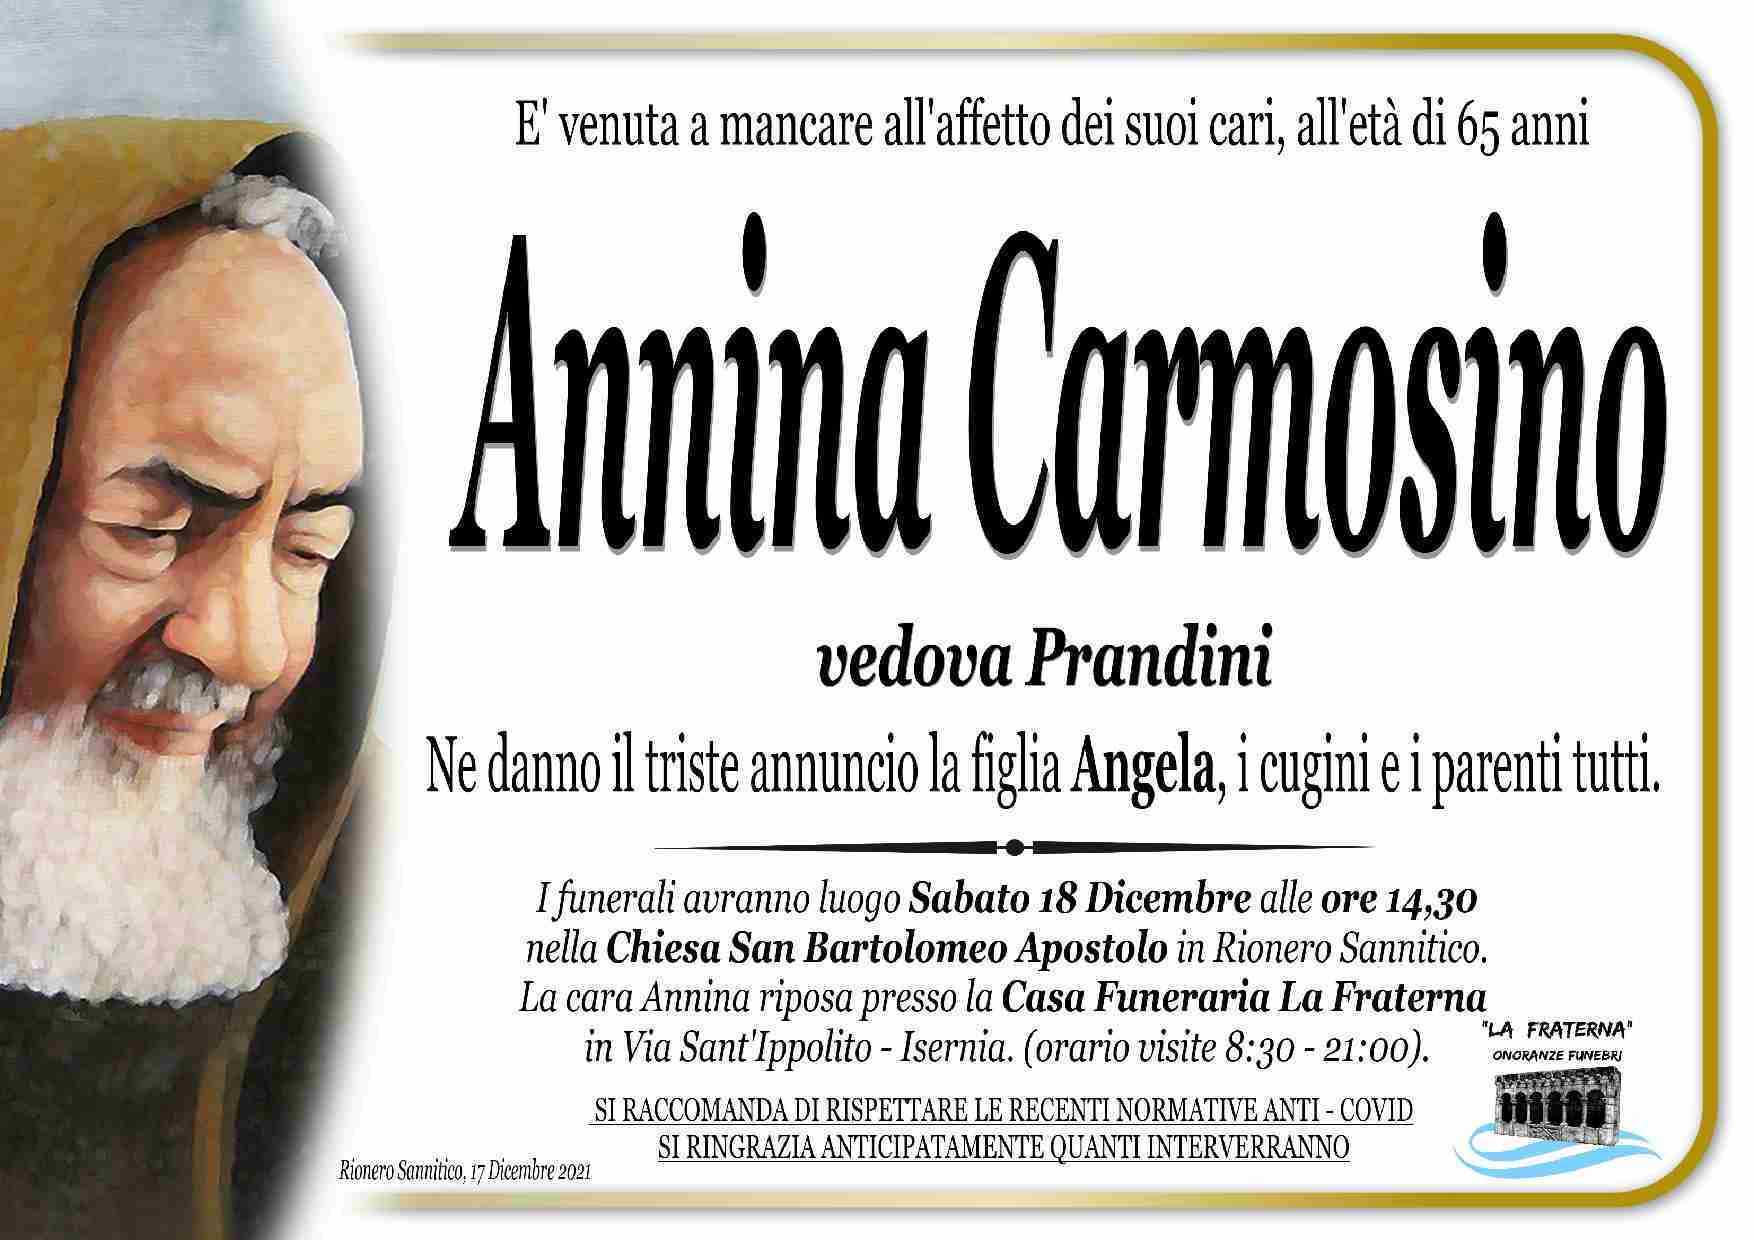 Annina Carmosino